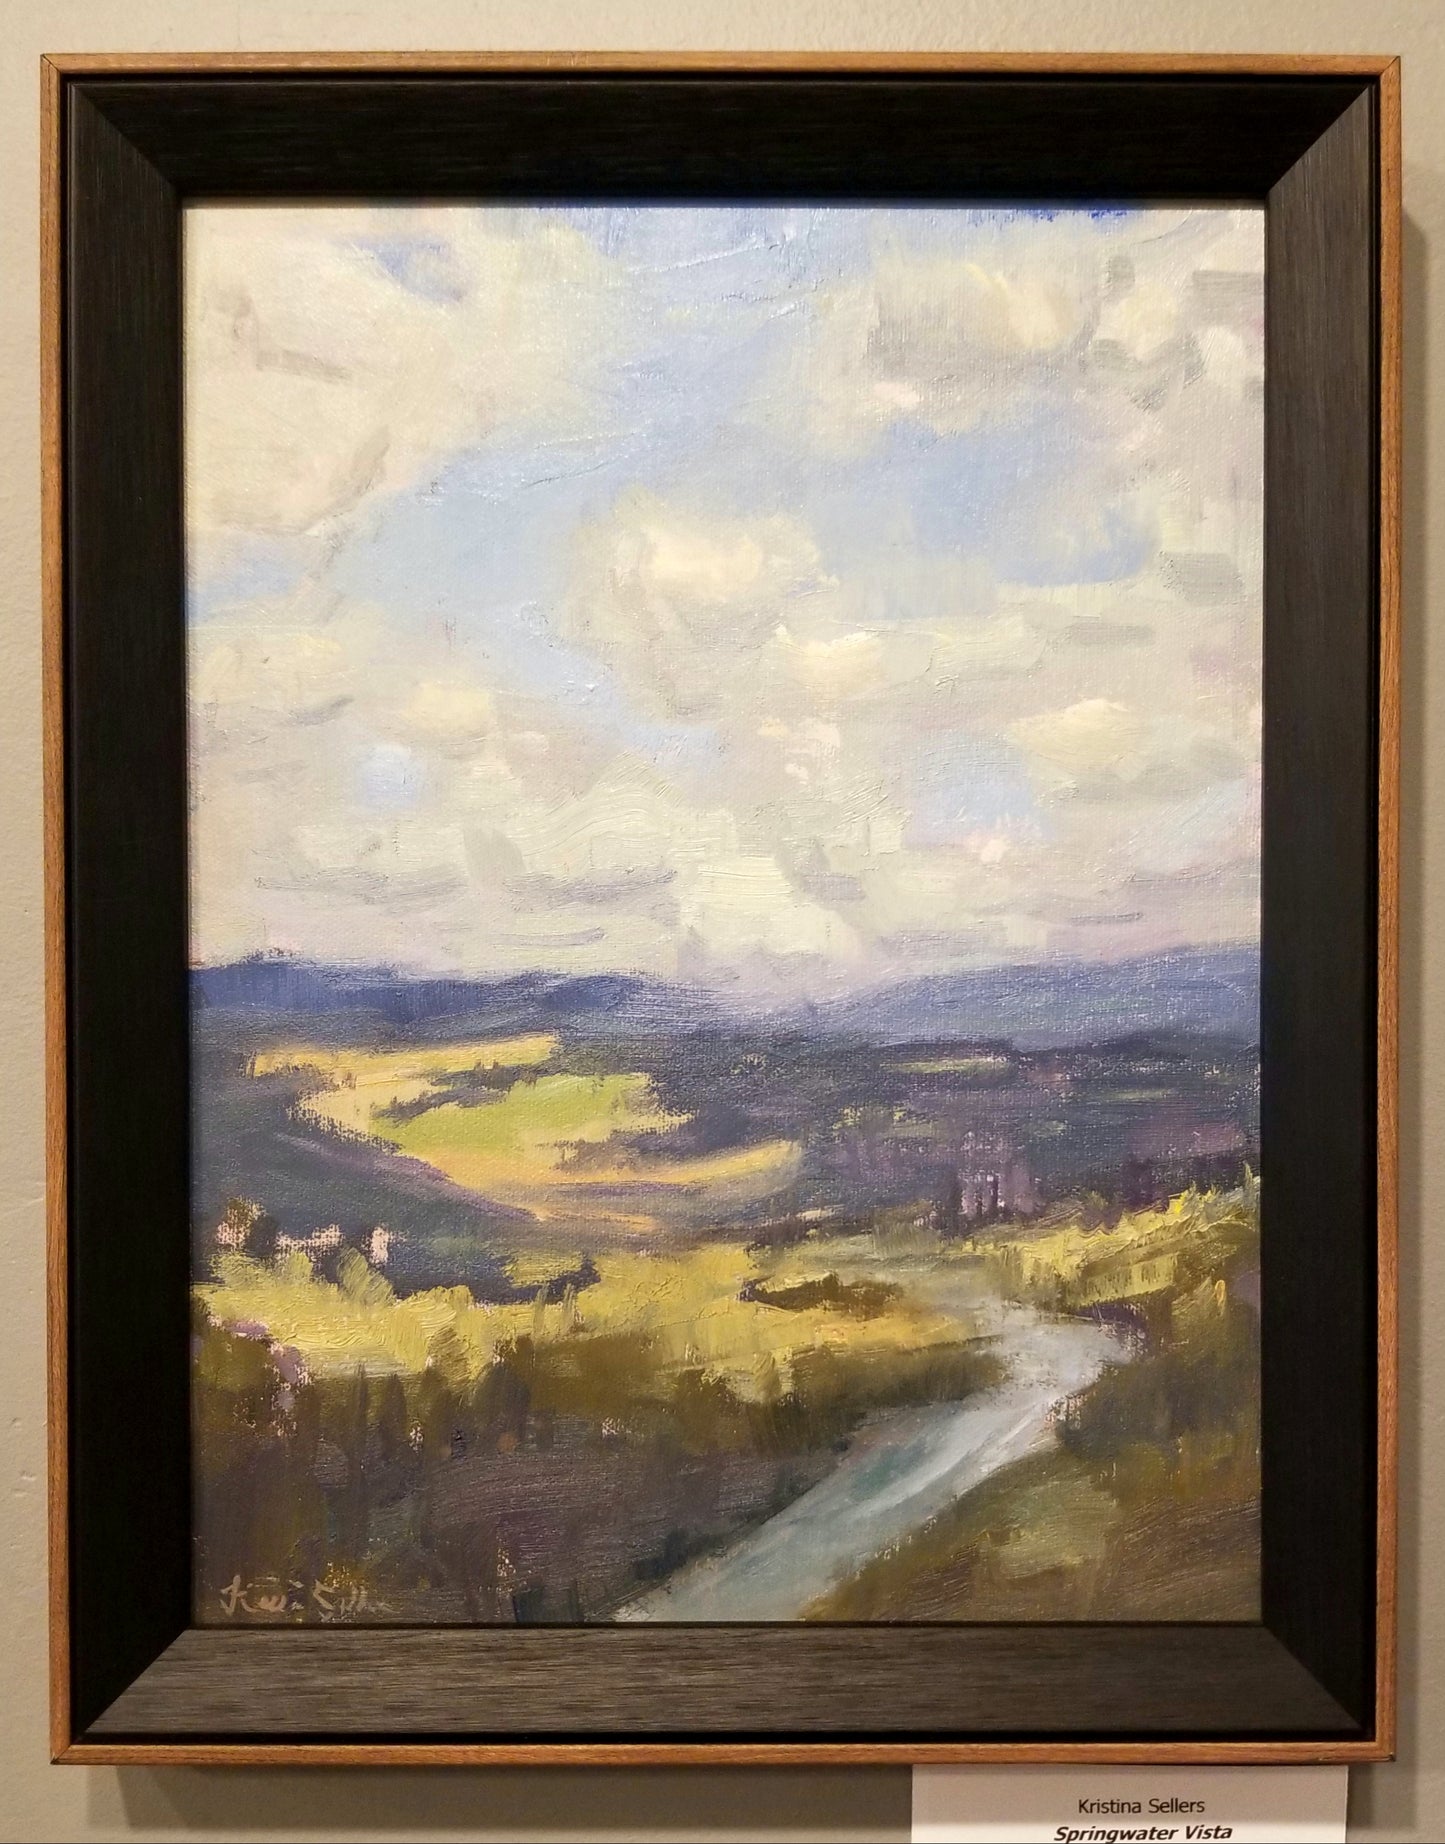 "Springwater Vista" impressionist landscape, 12x9 original oil painting by Artist Kristina Sellers